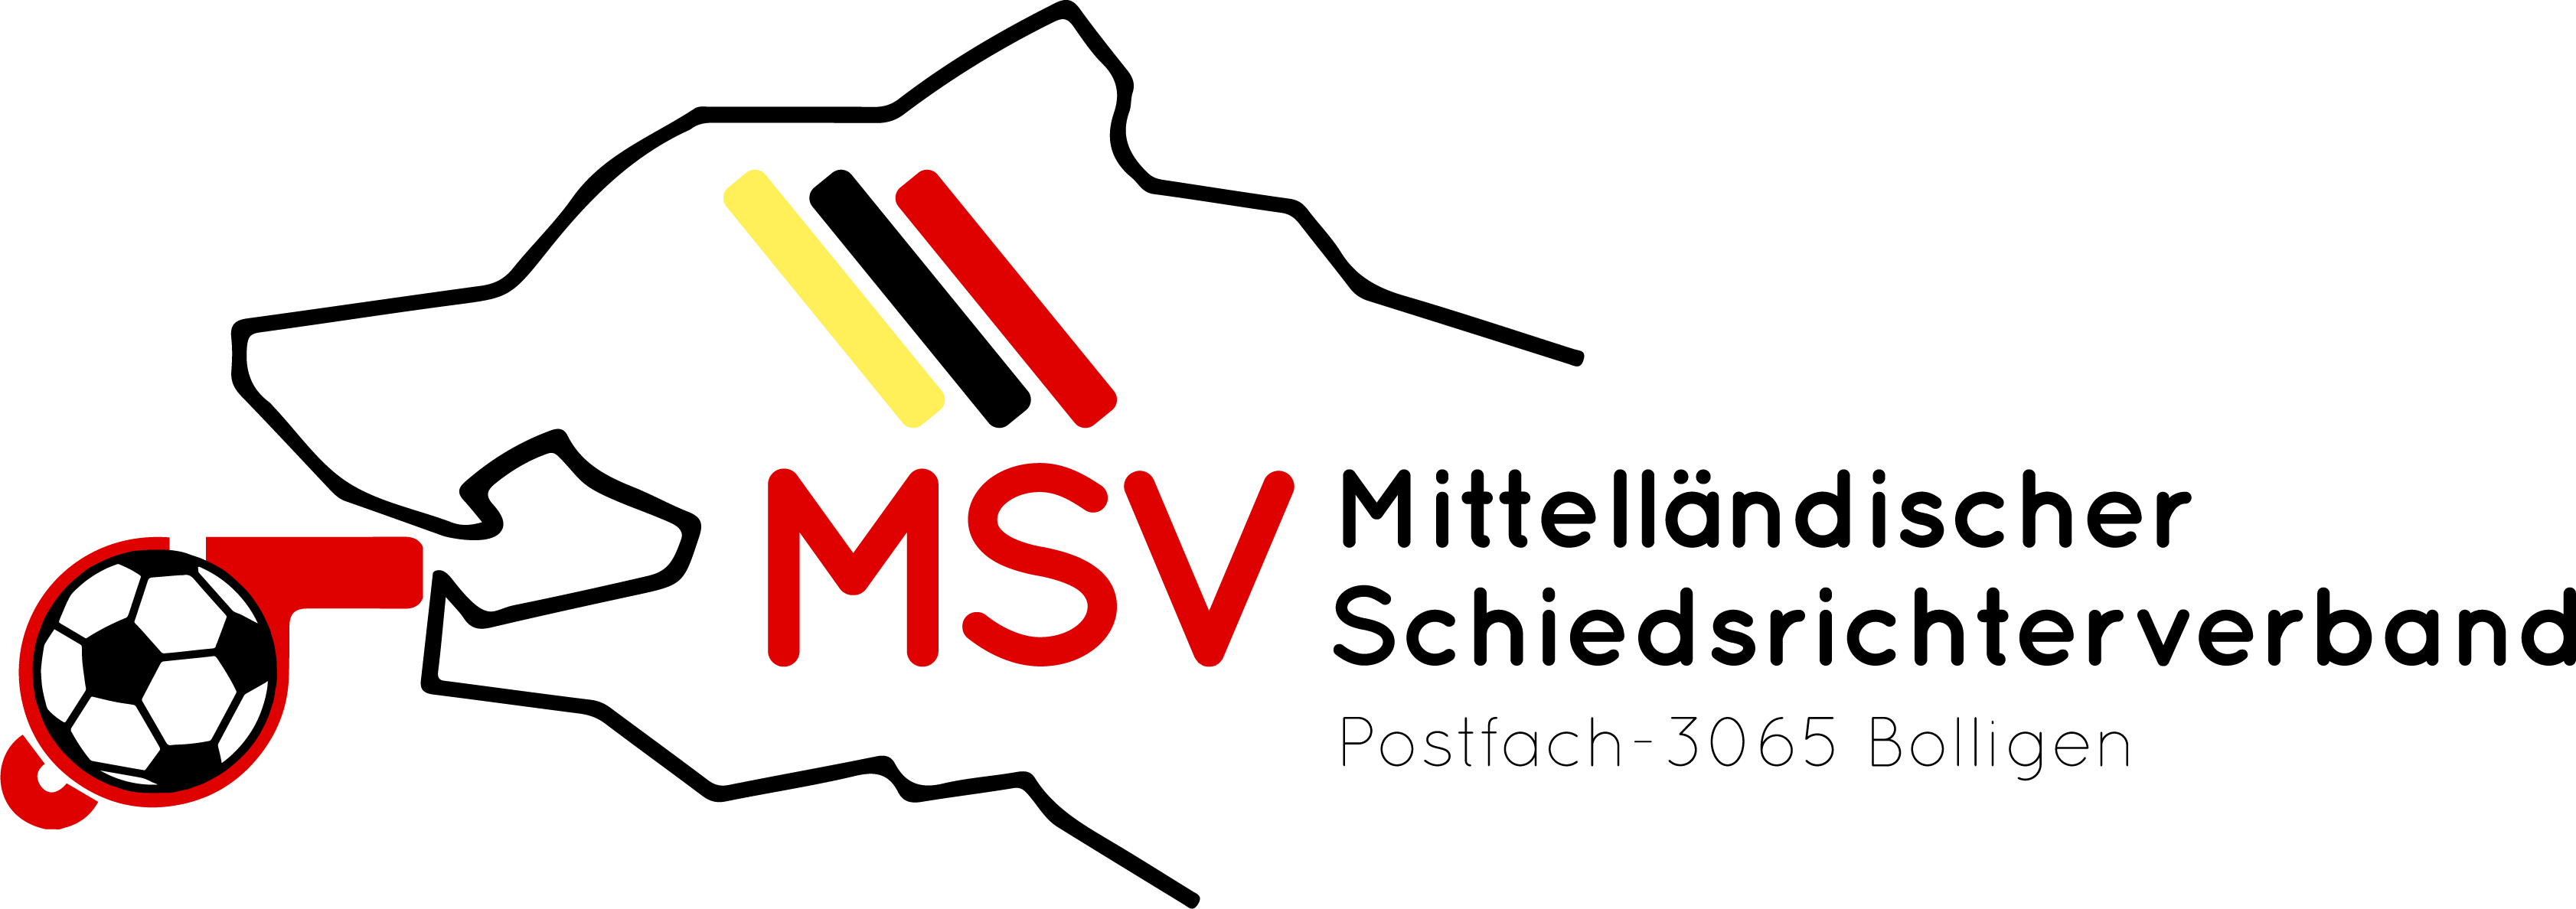 MSV Bern